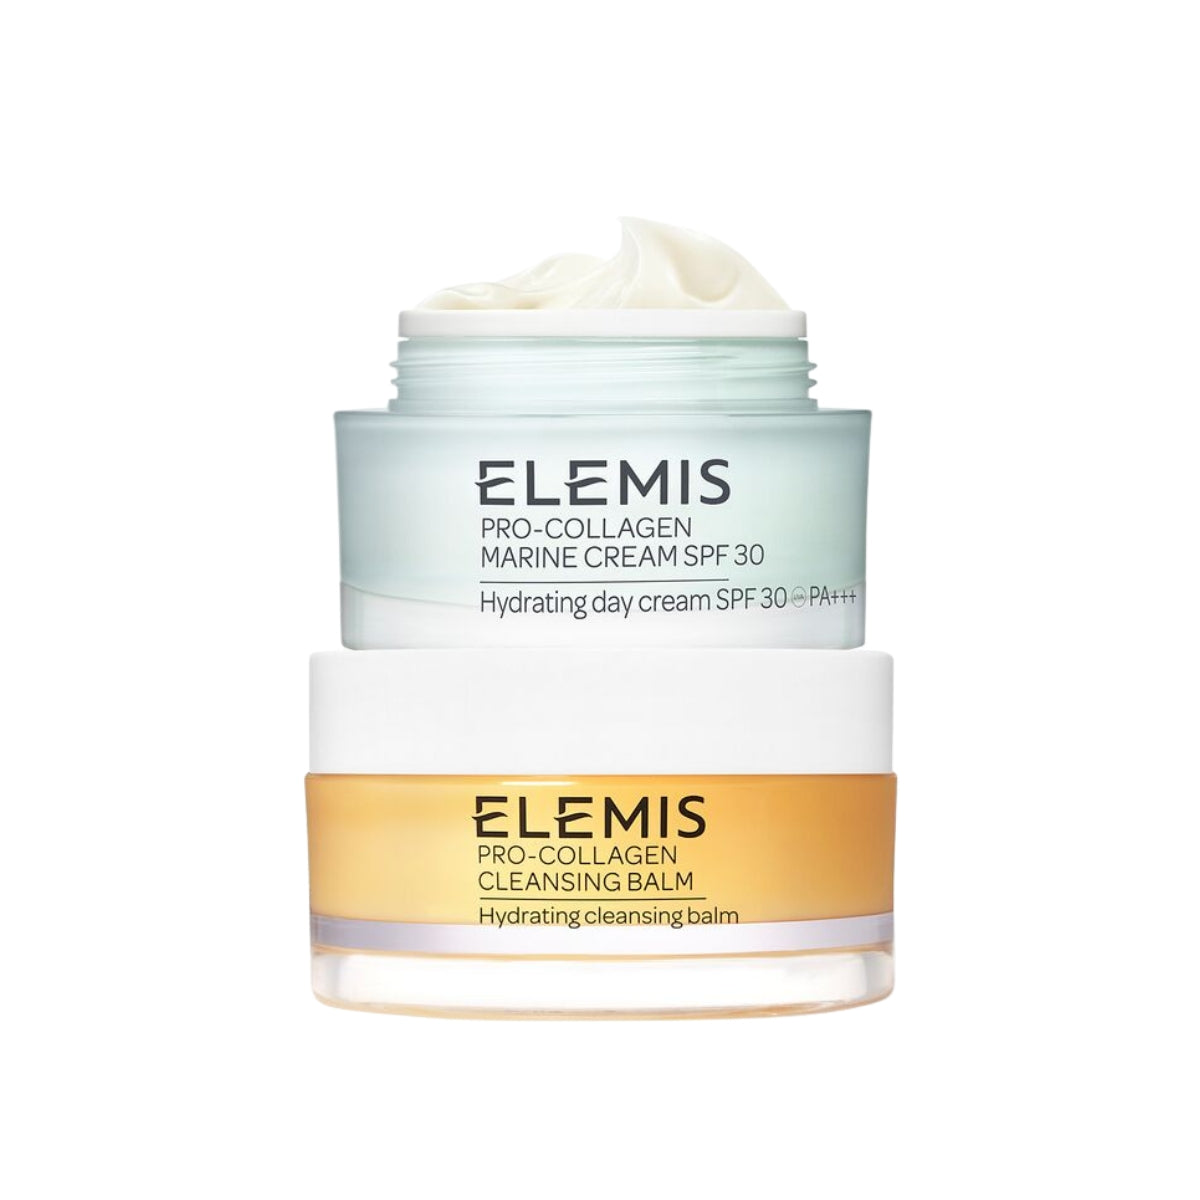 Elemis Pro-Collagen Marine Cream with FREE Elemis Cleansing Balm 50g